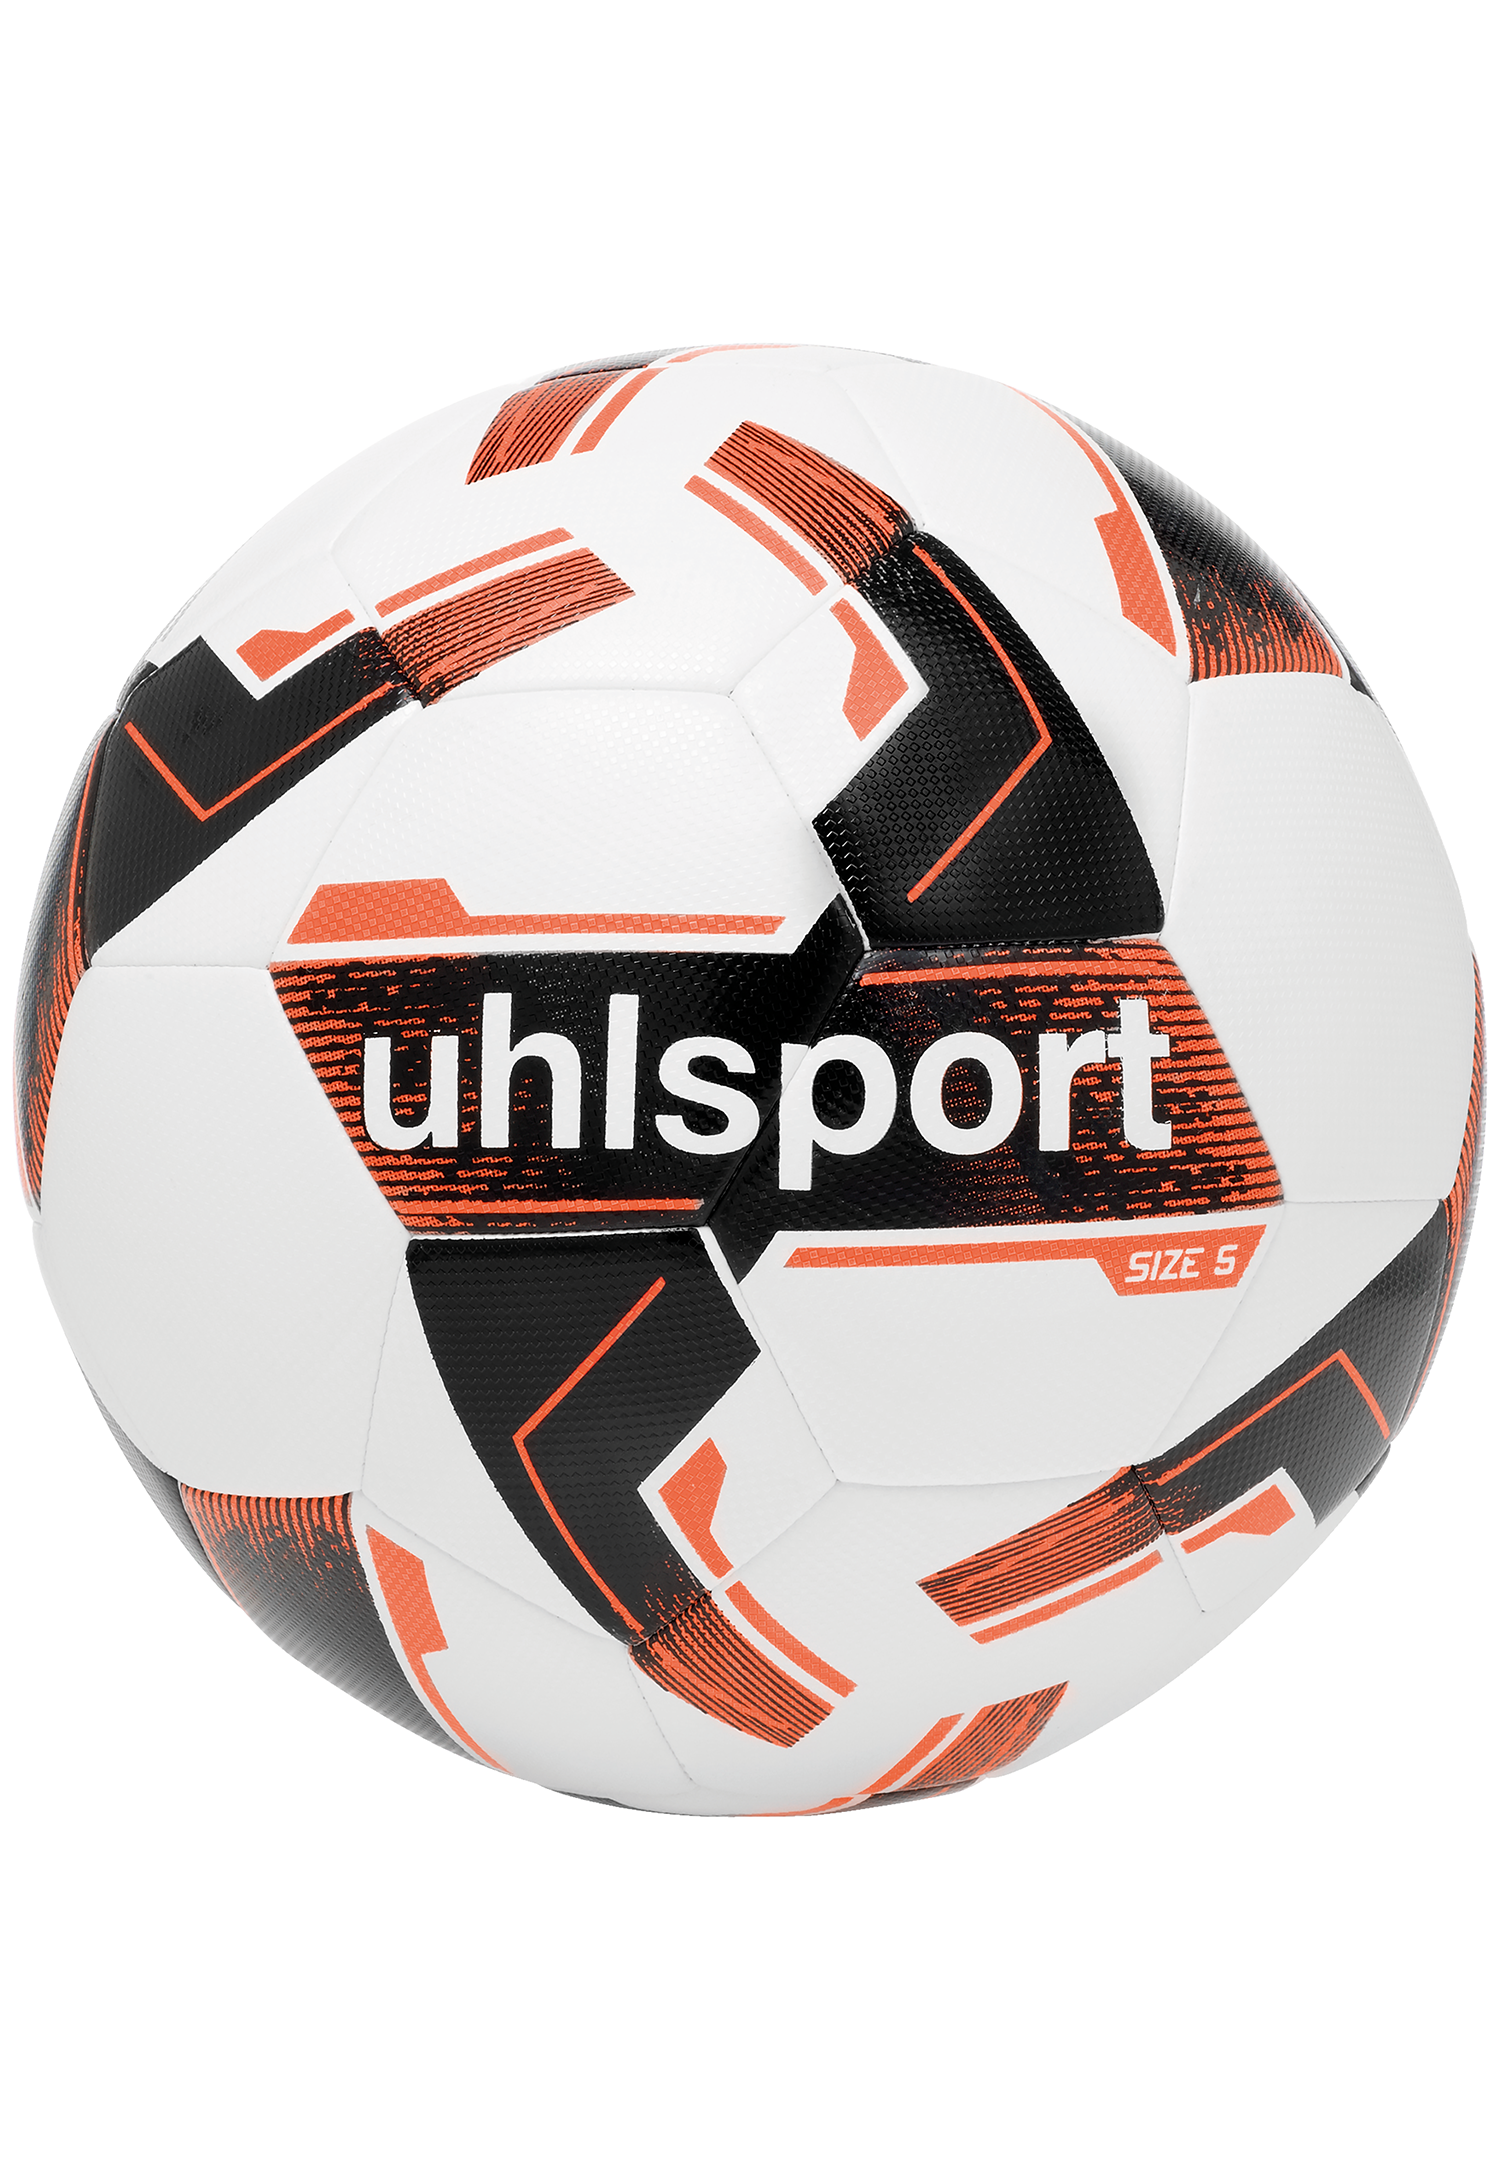 Uhlsport RESIST SYNERGY Fussball Spiel- und Training Ball 100172001 Gr. 5